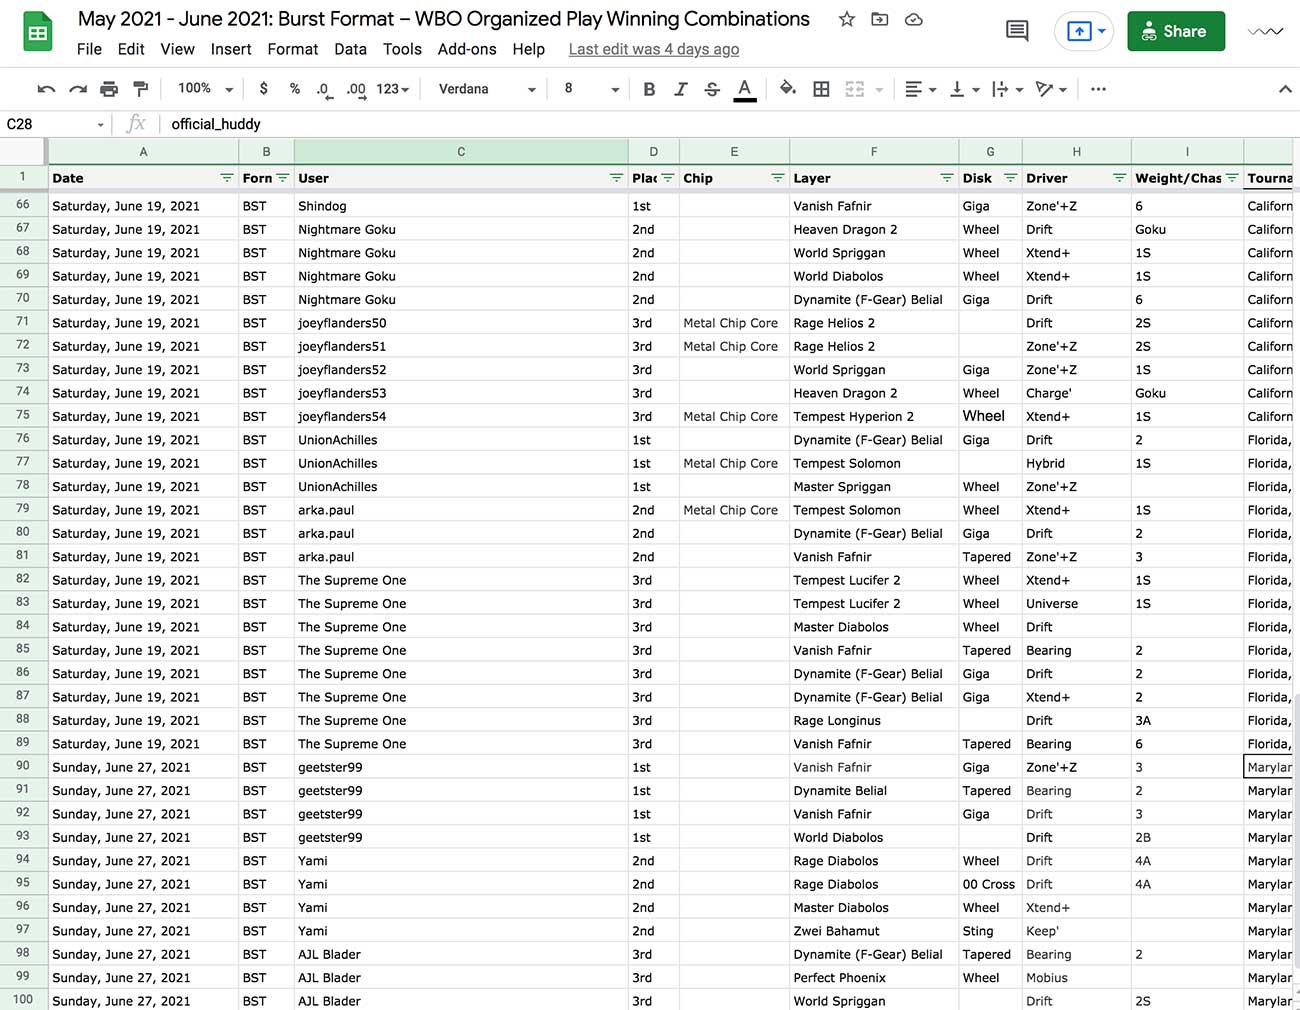 spreadsheet screenshot showing winning beyblade combinations